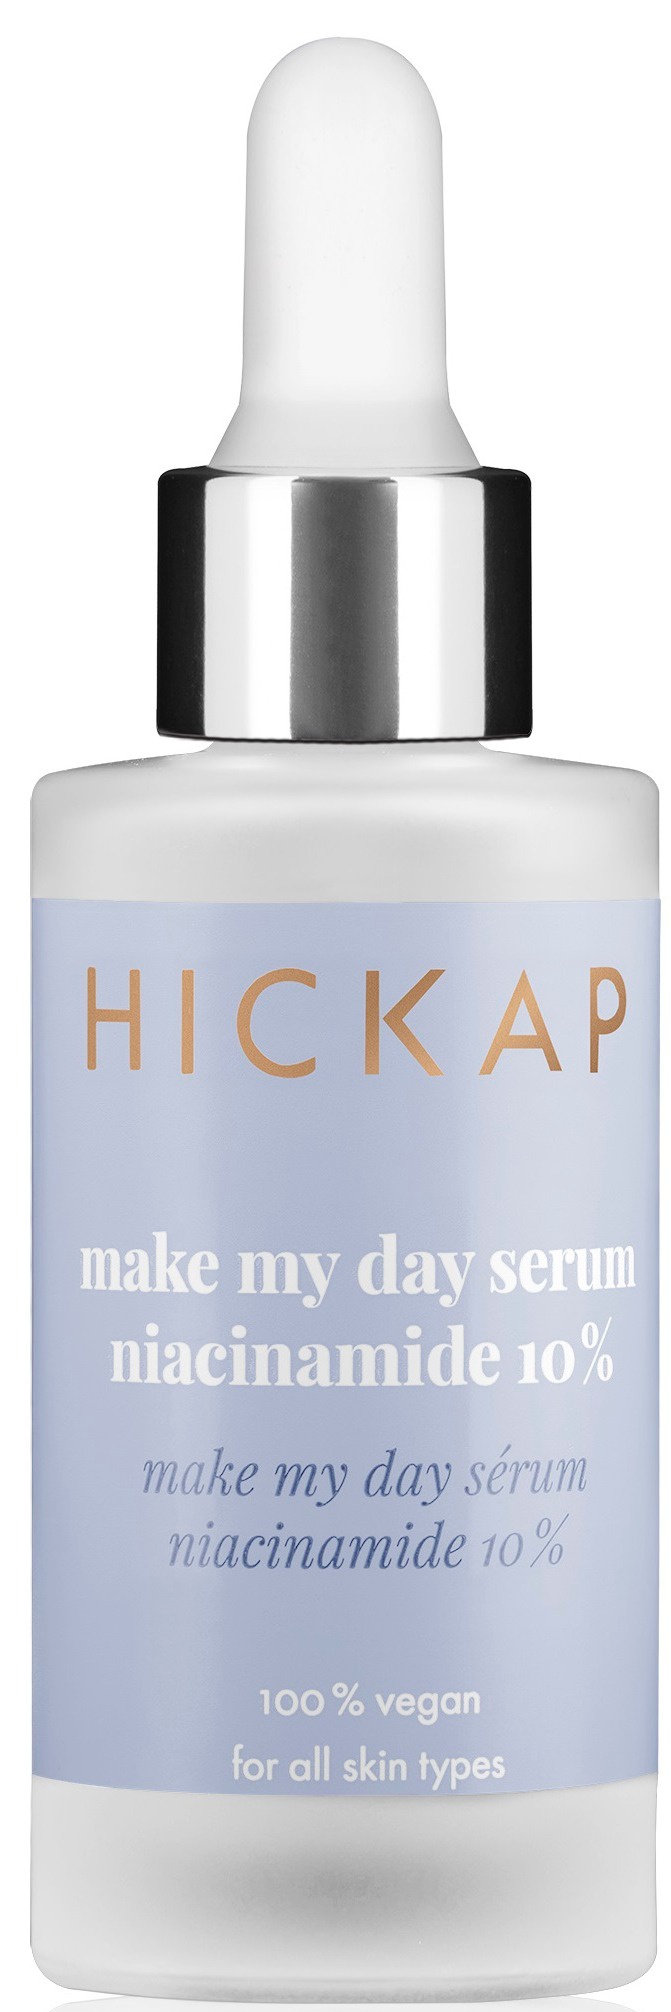 Hickap Make My Day Serum Niacidamide 10%